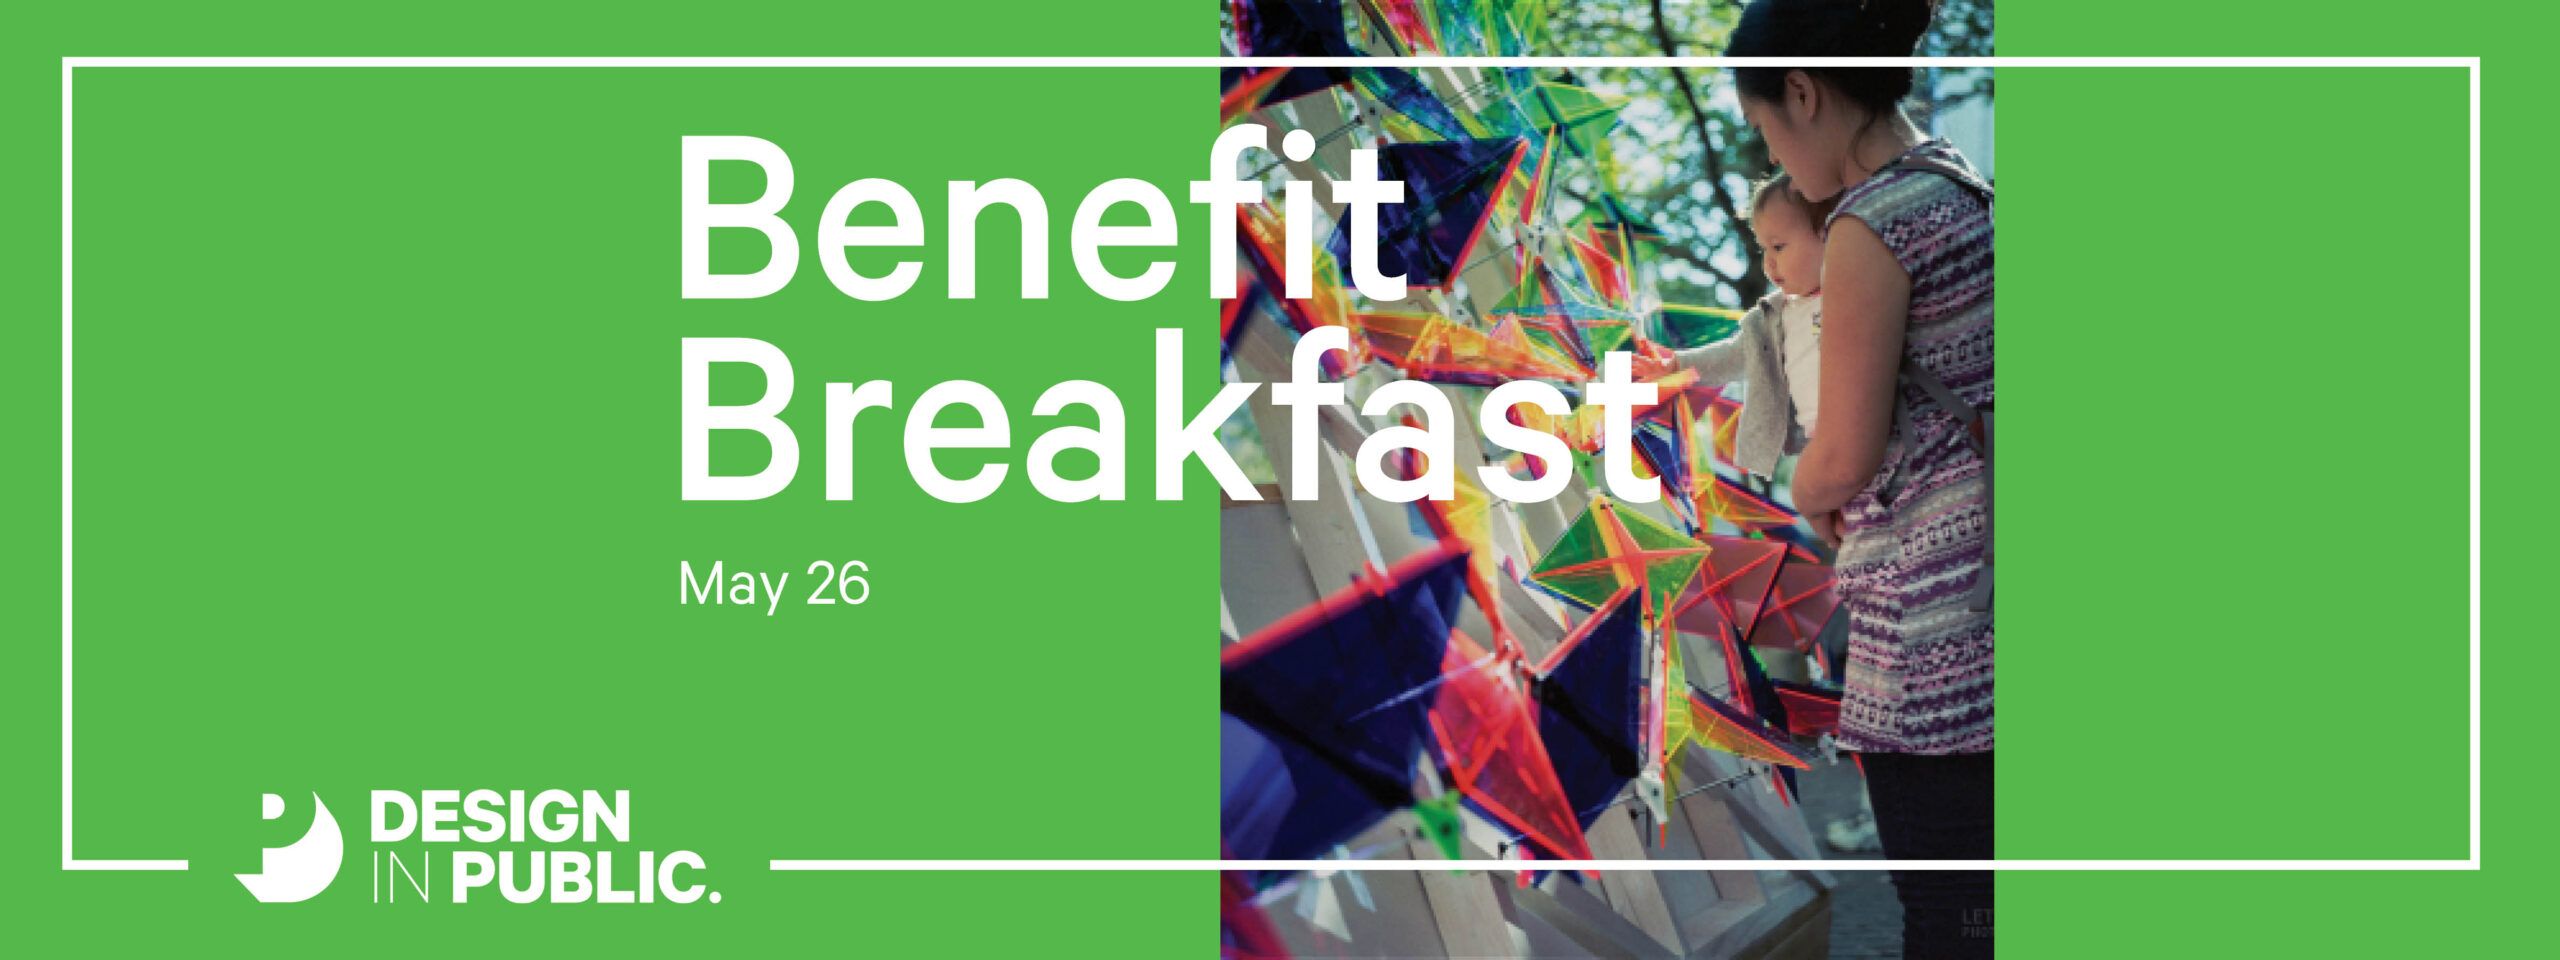 Design in Public Benefit Breakfast is May 26